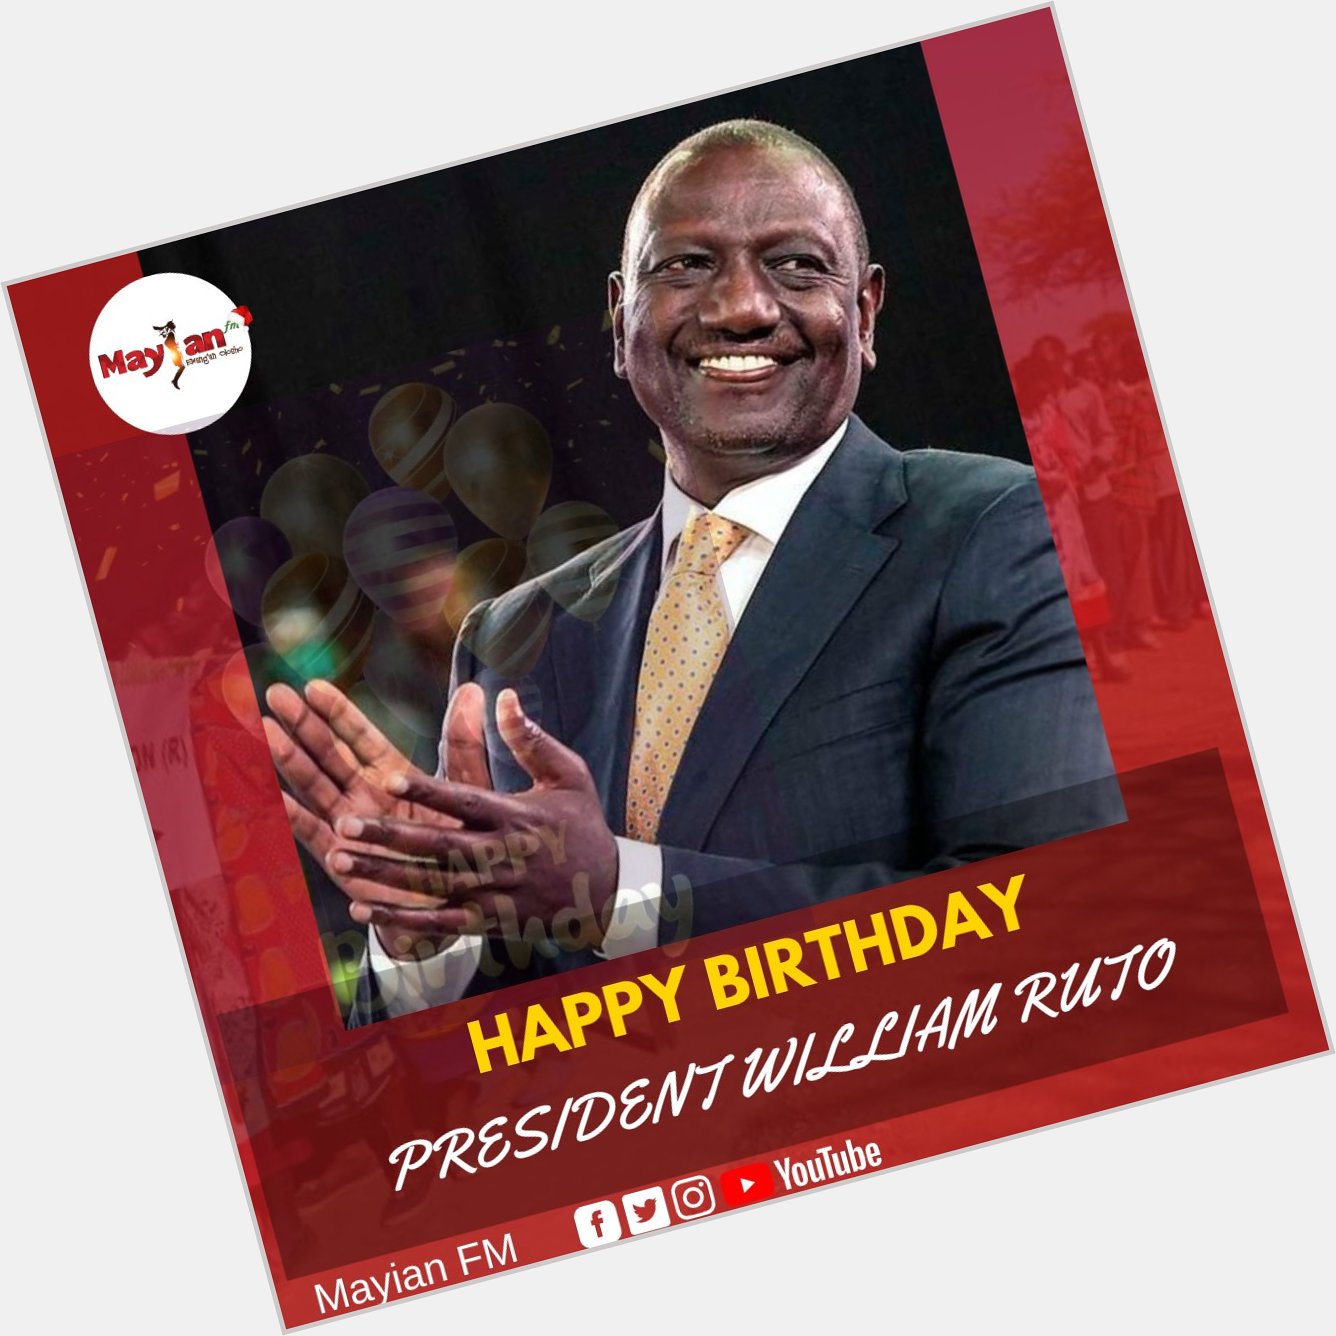 Happy birthday, President William Ruto. 